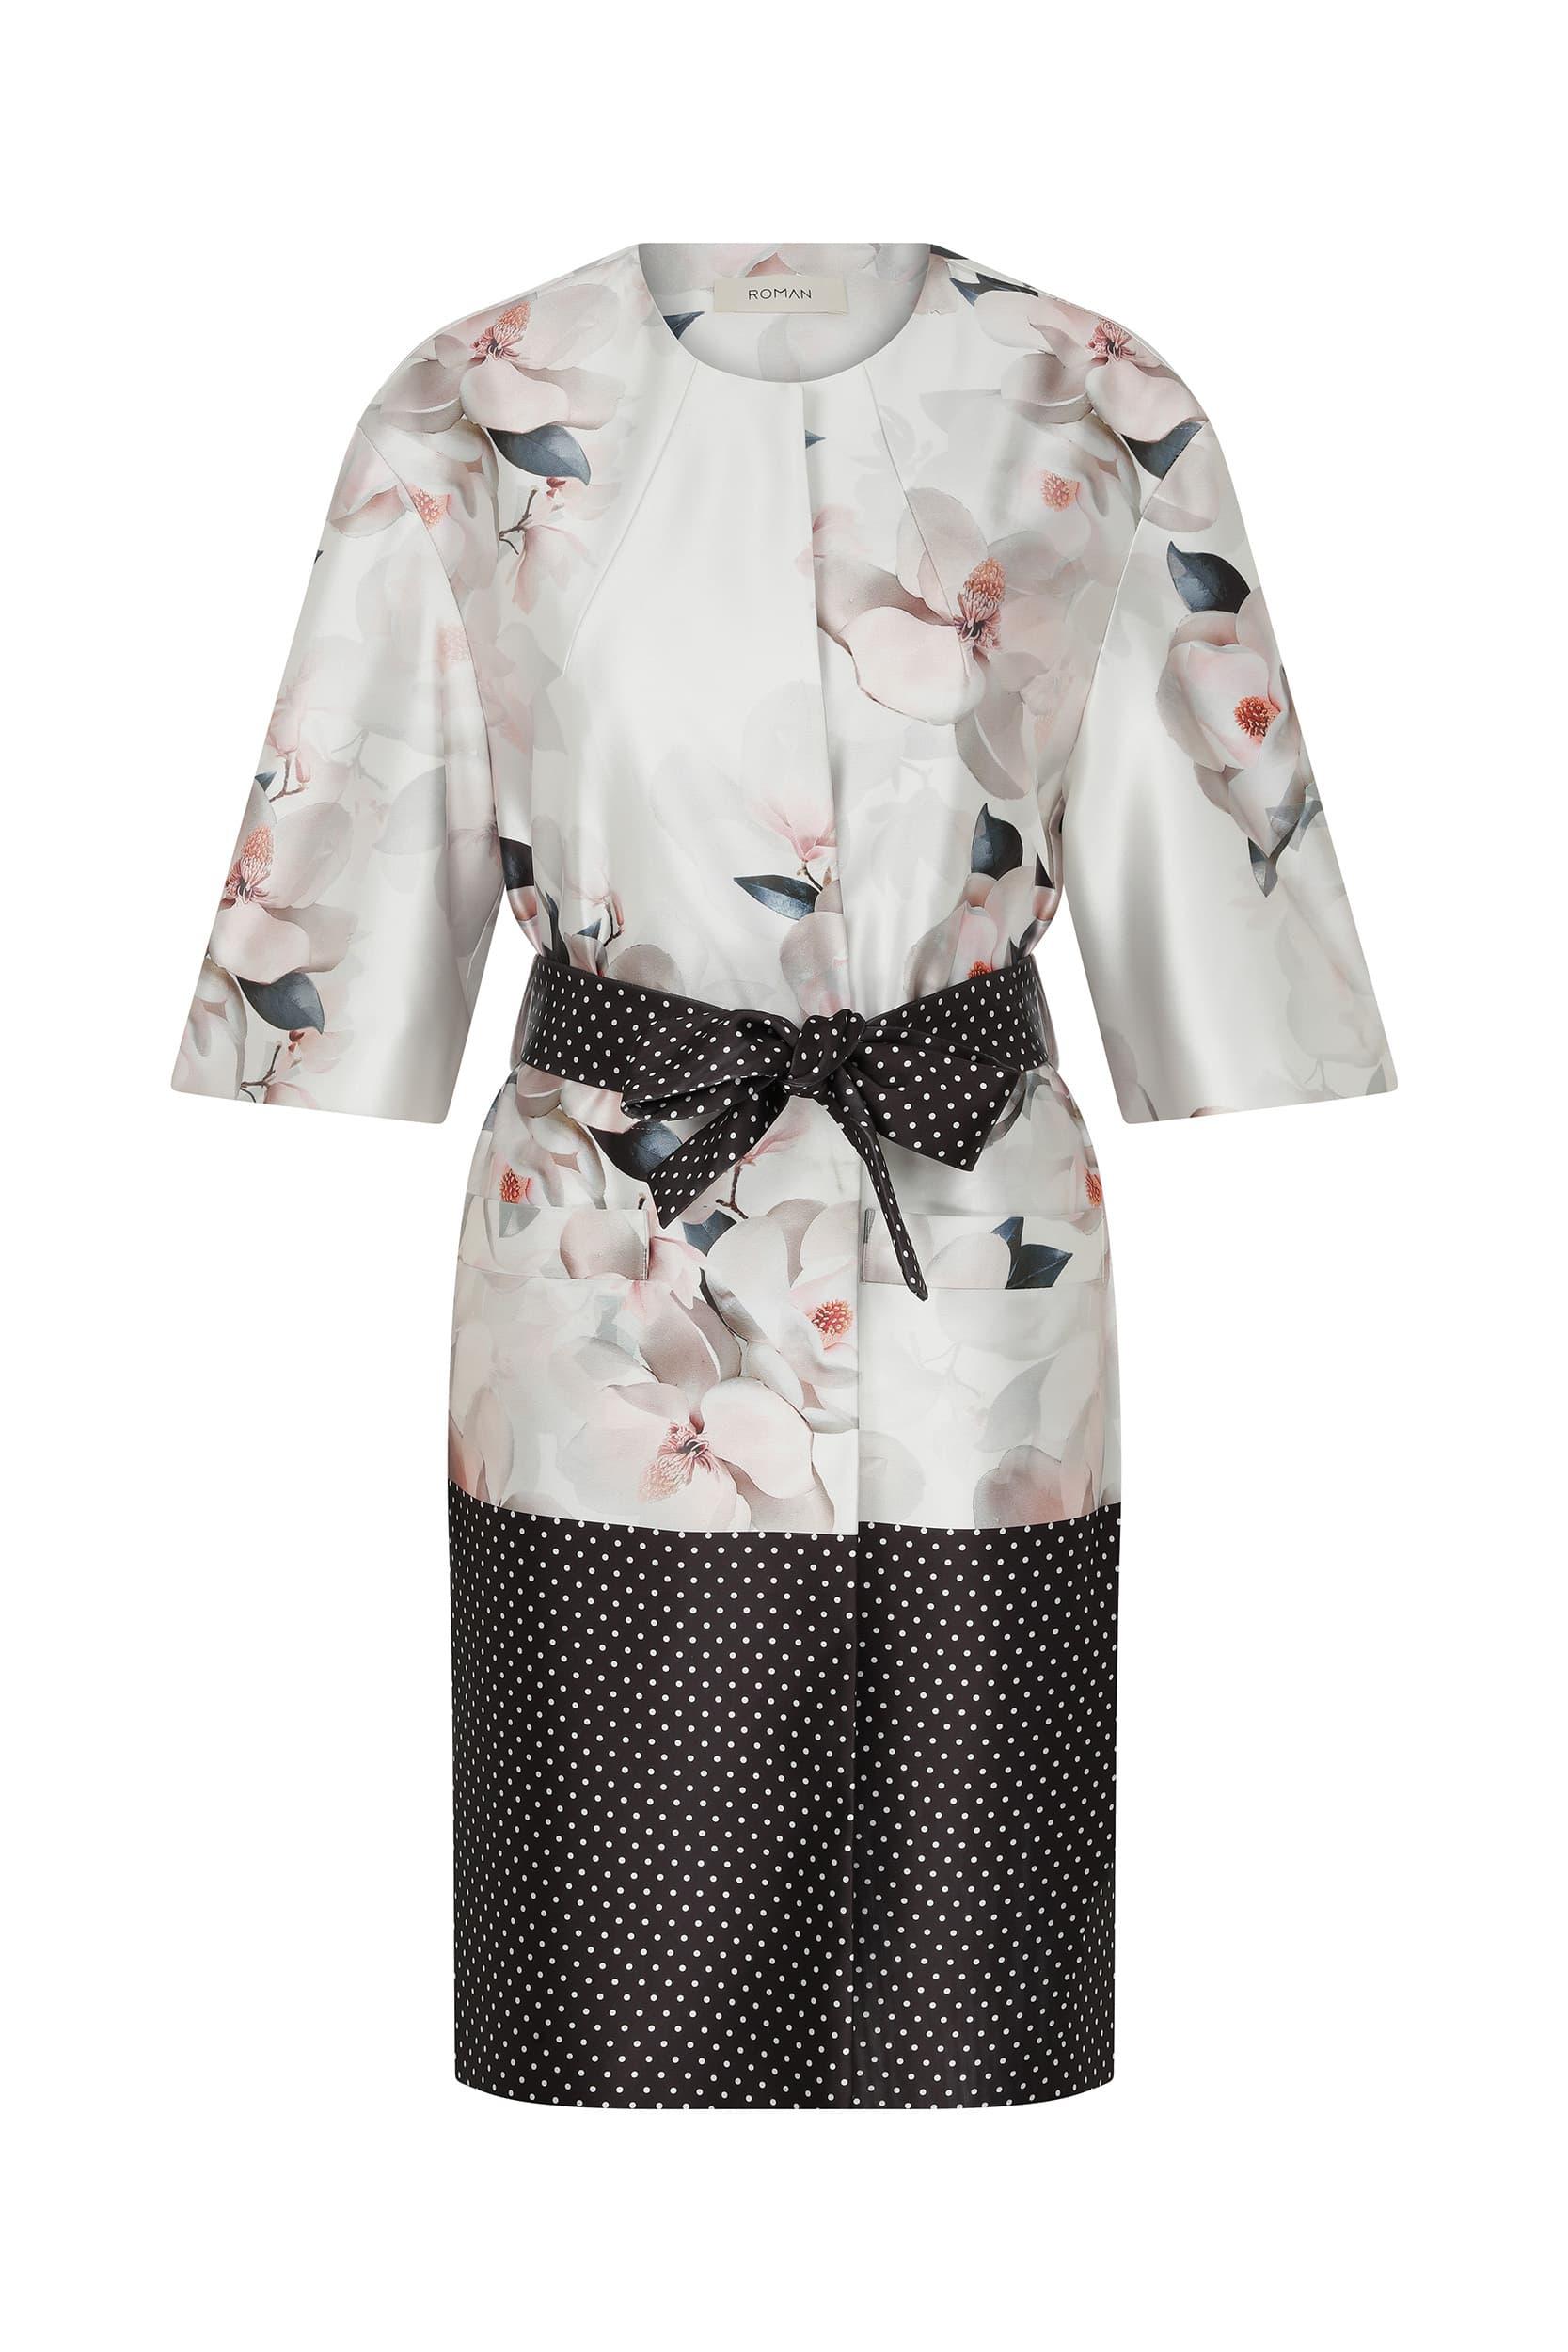 Roman Tokyo Floral Jacket - Conscious Product | Lyst